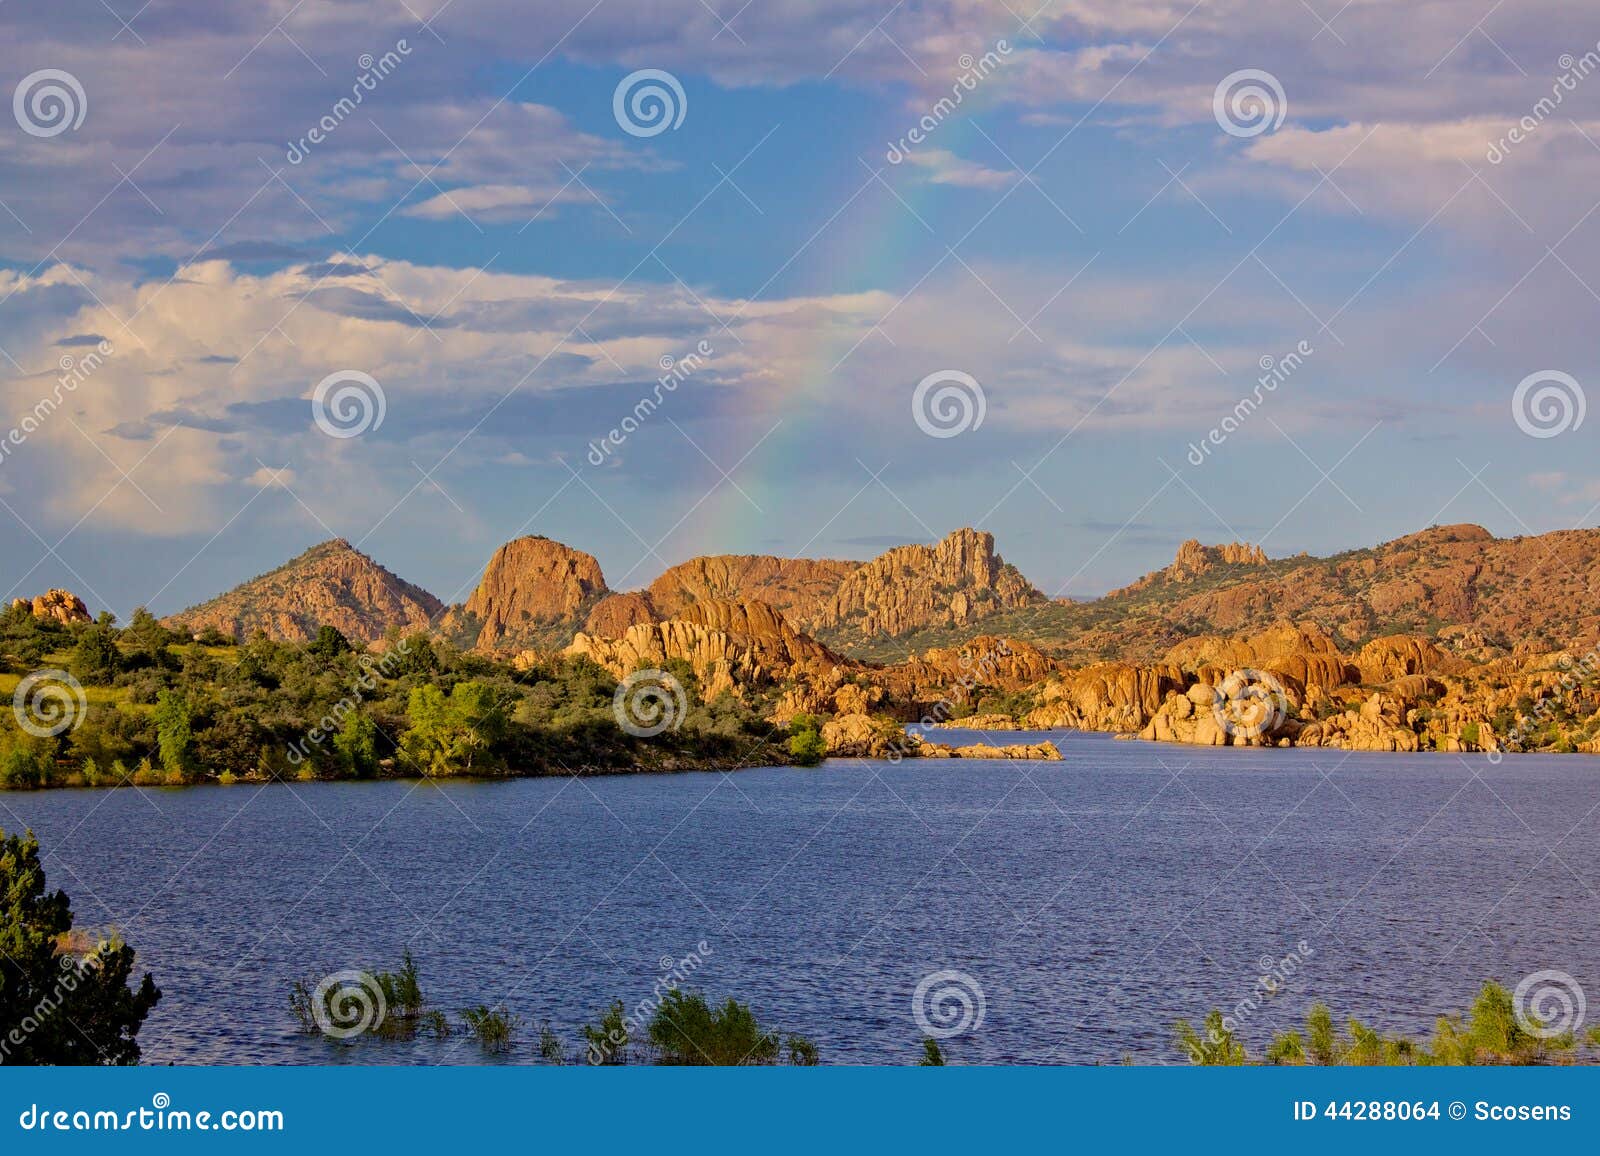 ... beautiful-granite-rock-formations-scenic-prescott-arizona-44288064.jpg